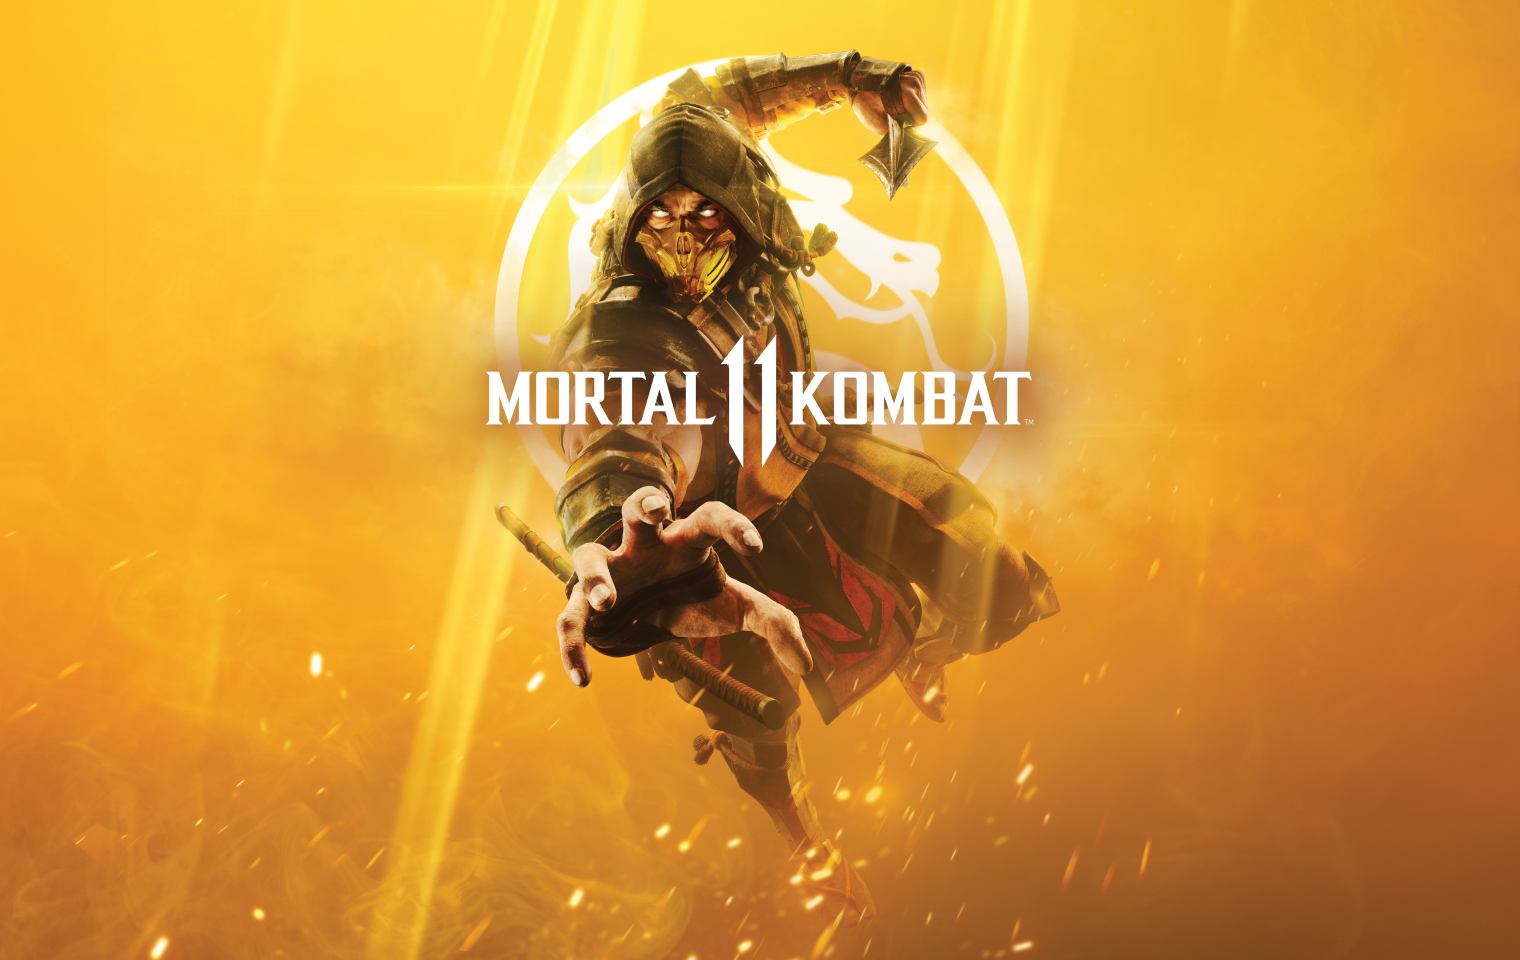 General 1520x960 Mortal Kombat 11 Mortal Kombat yellow background video games video game warriors video game characters video game art gradient orange background